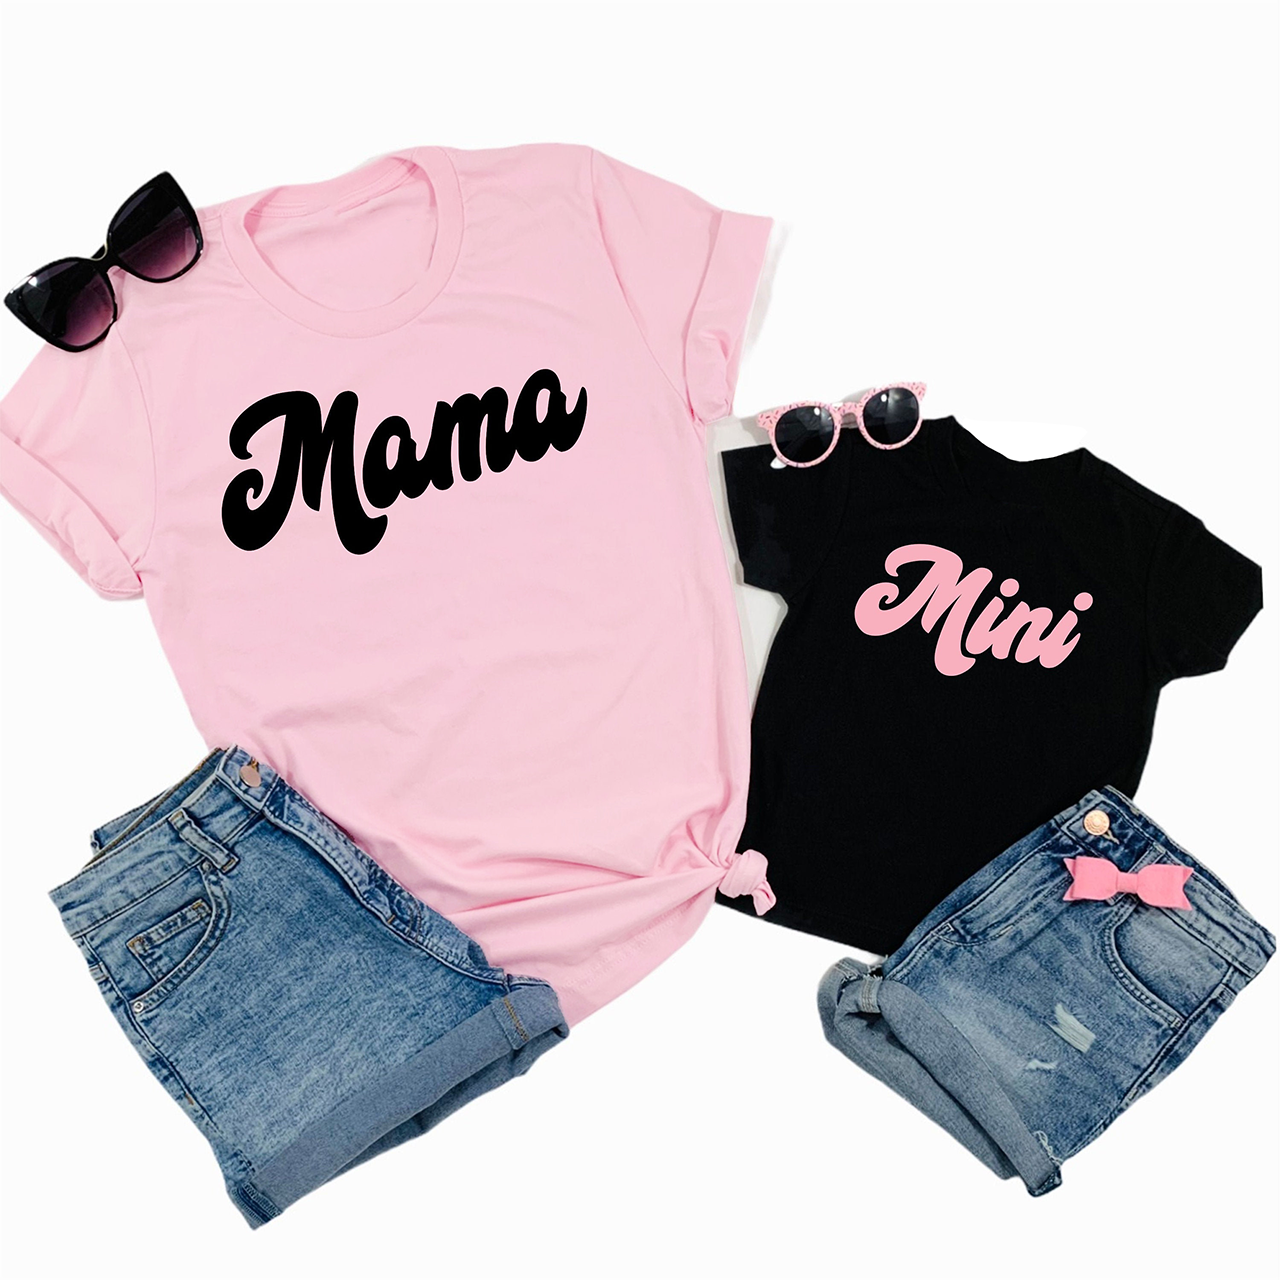 Mama and Mini's Romantic Valentine's Day Matching Shirts